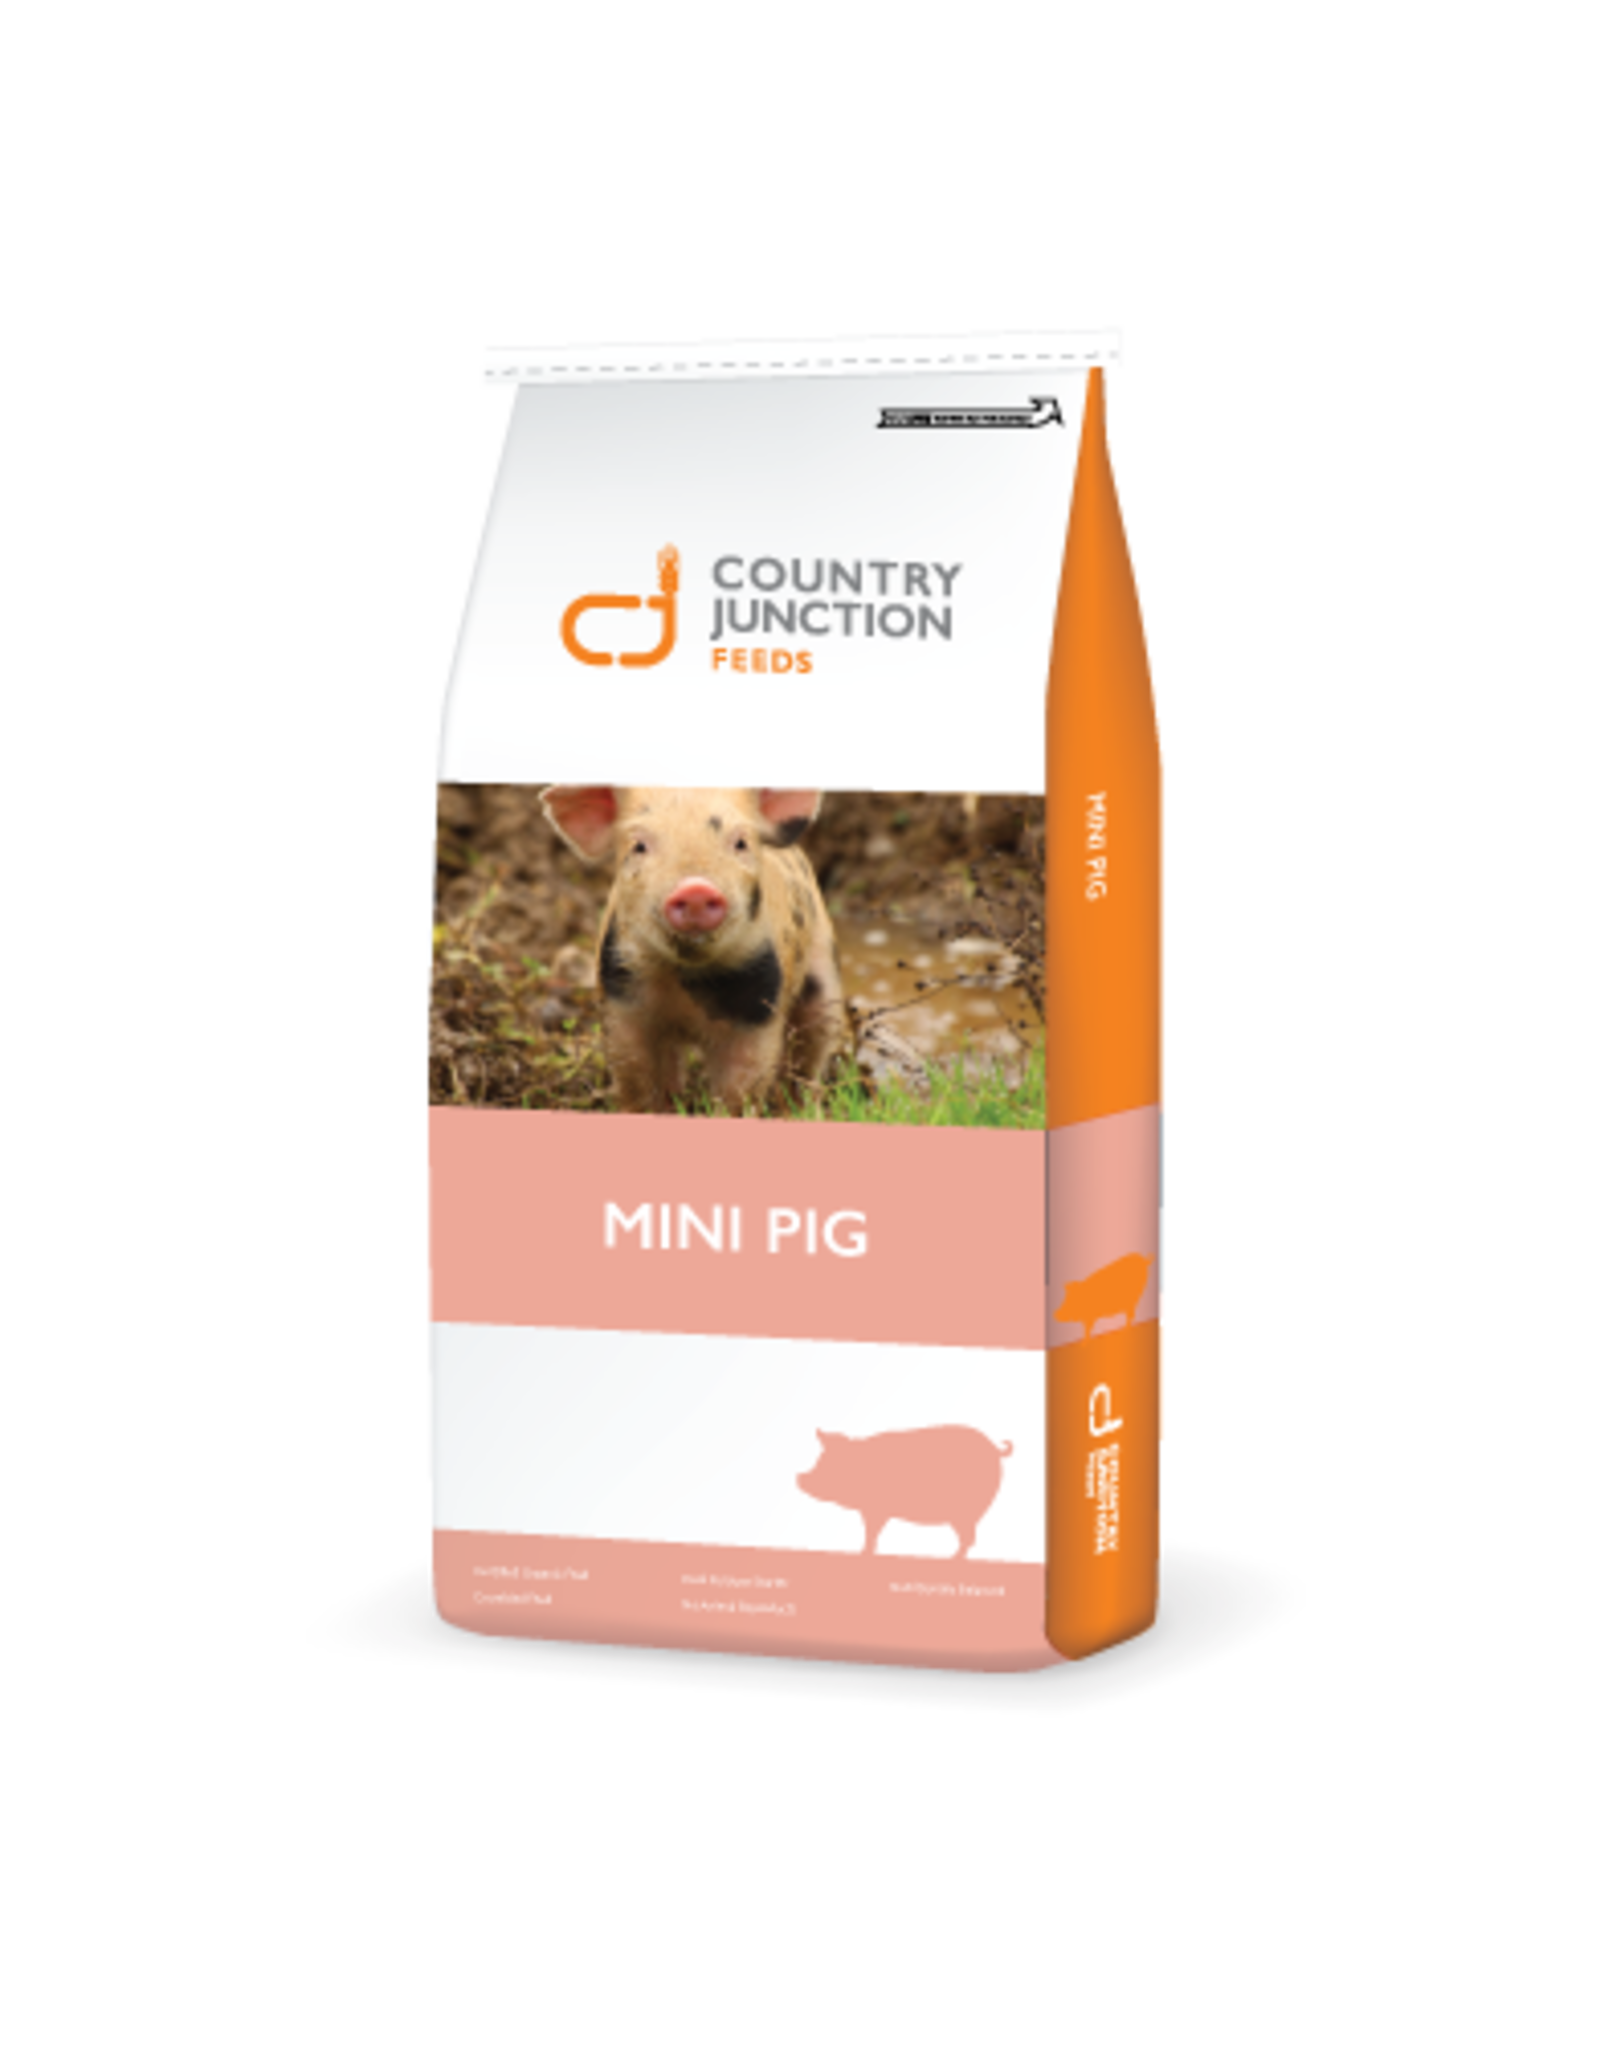 PIG - Adult Mini Pig  - Pellet - 20Kg M800900B  (C-CAN) - Country Junction 13% CP, 3.5% Fat, 12.5% Fiber